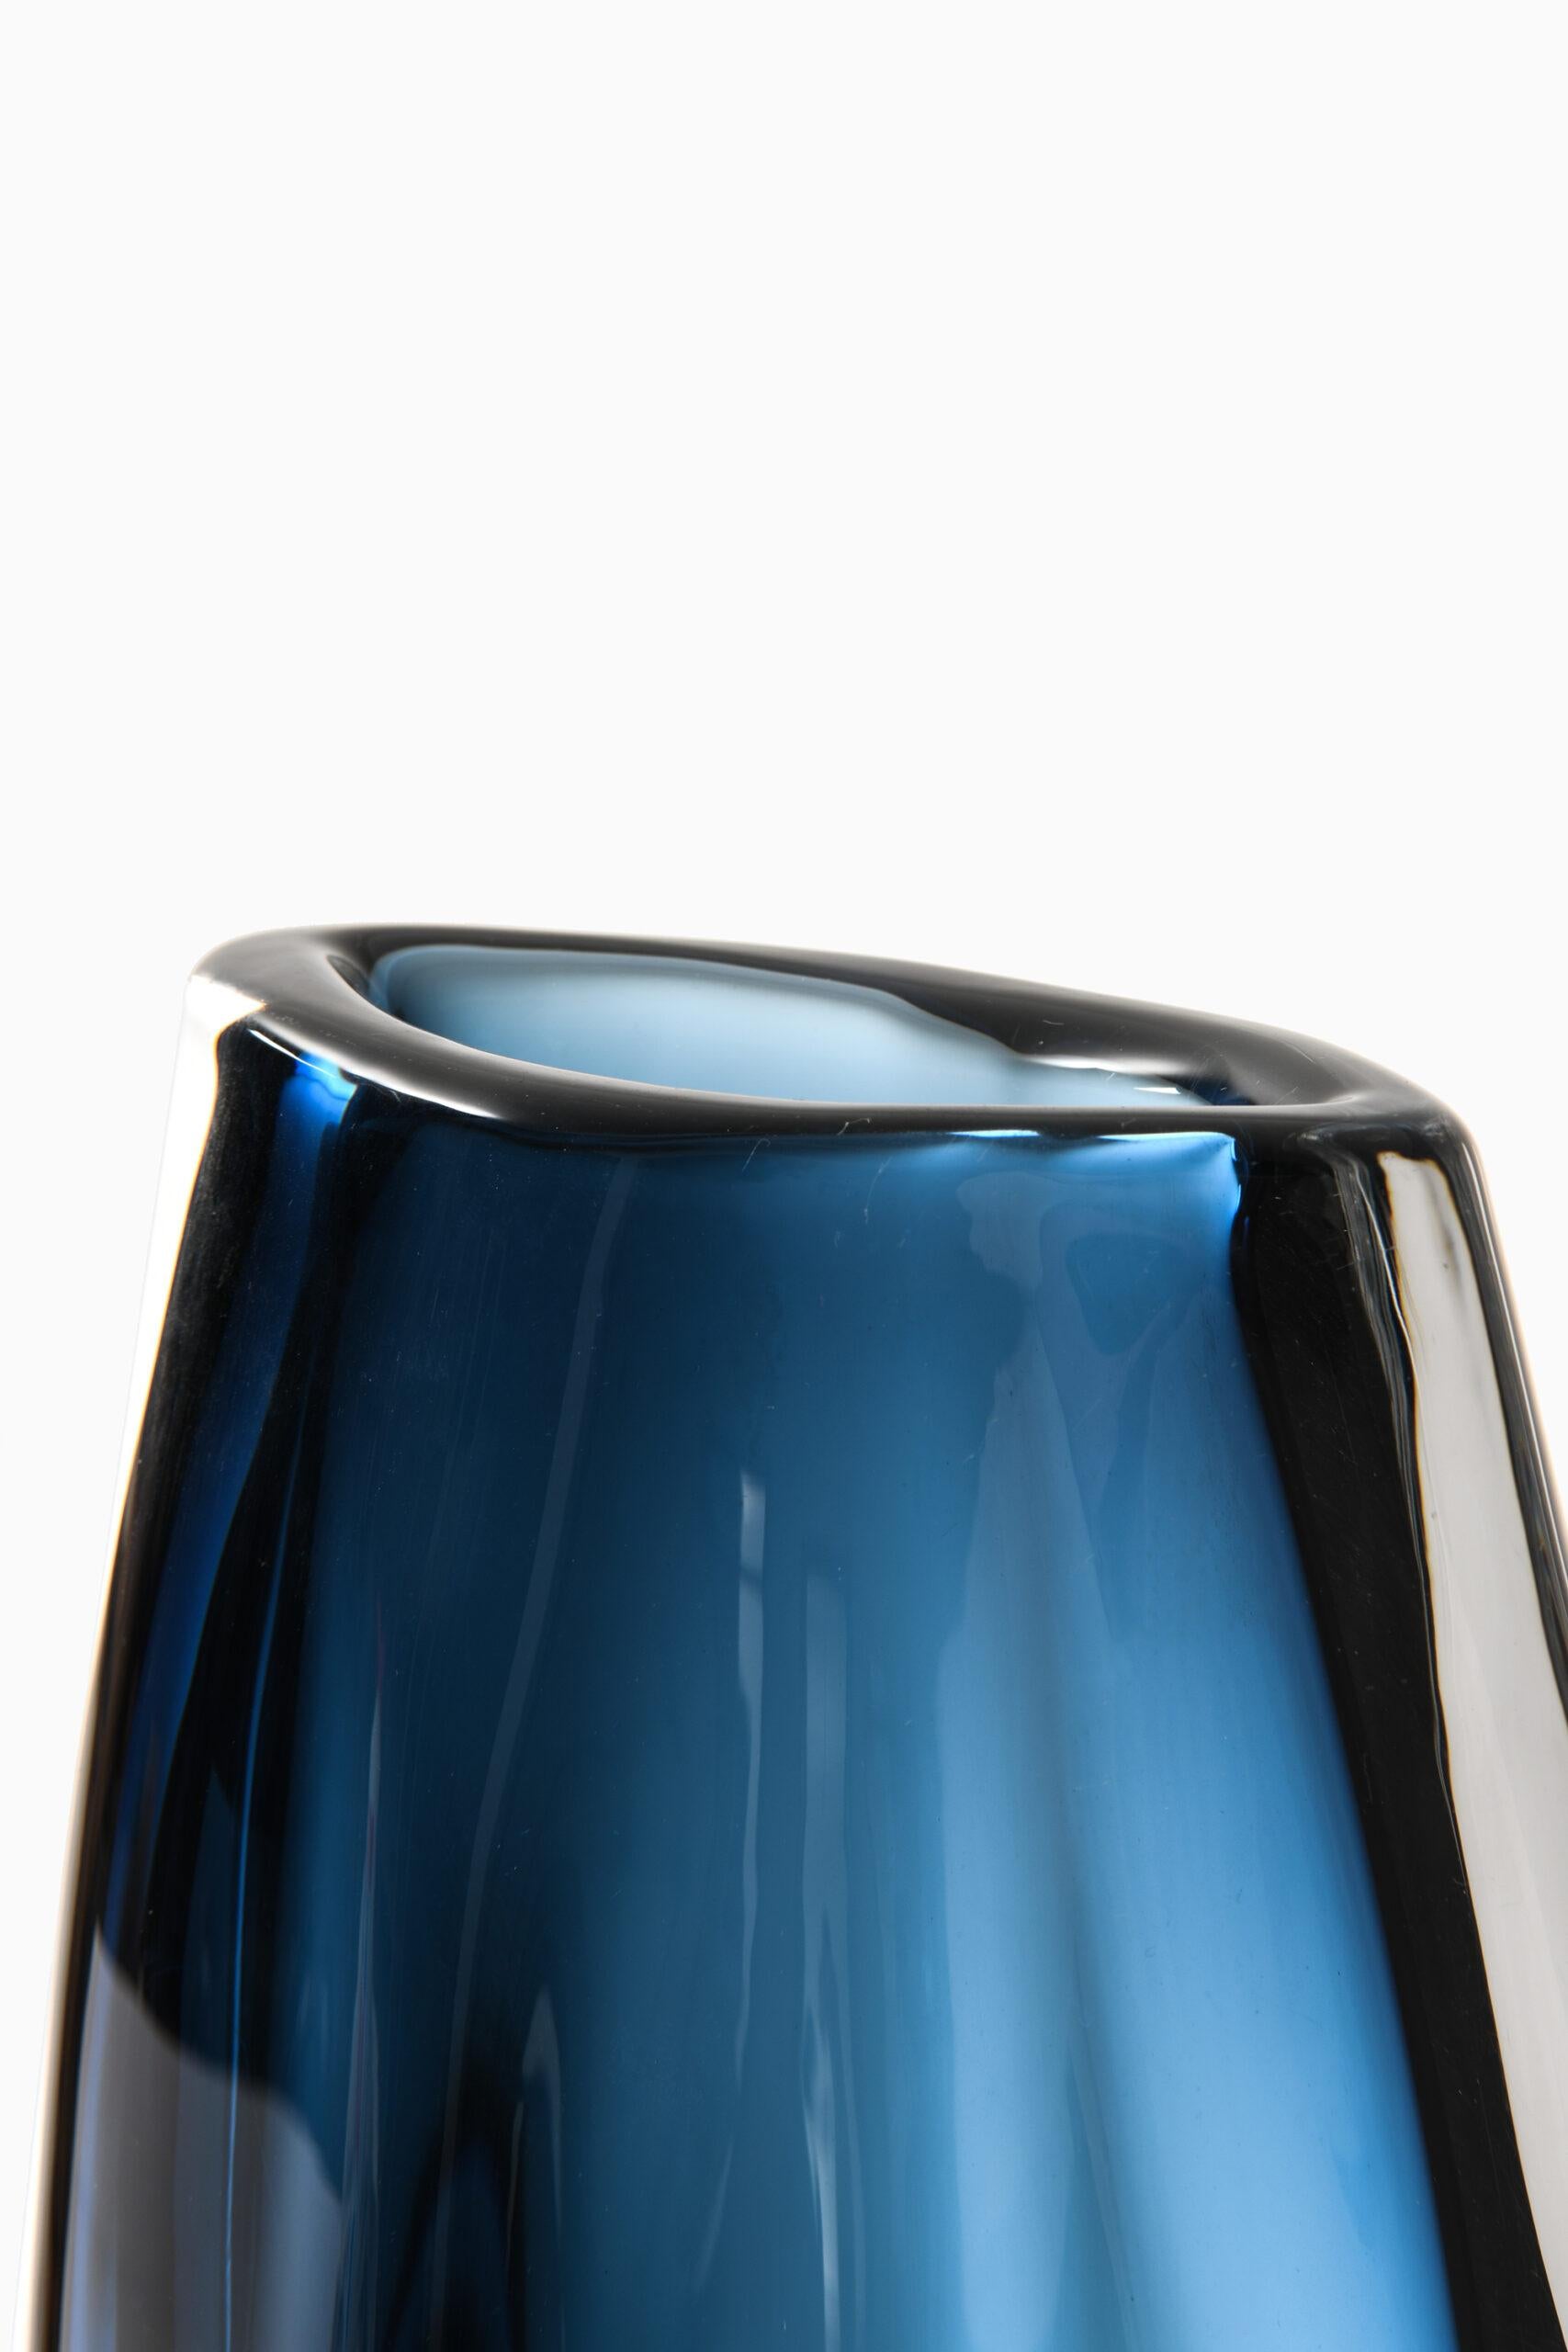 Rare and large glass vase designed by Nils Landberg. Produced by Orrefors in Sweden. Signed ‘Orrefors expo -63 Landberg’.